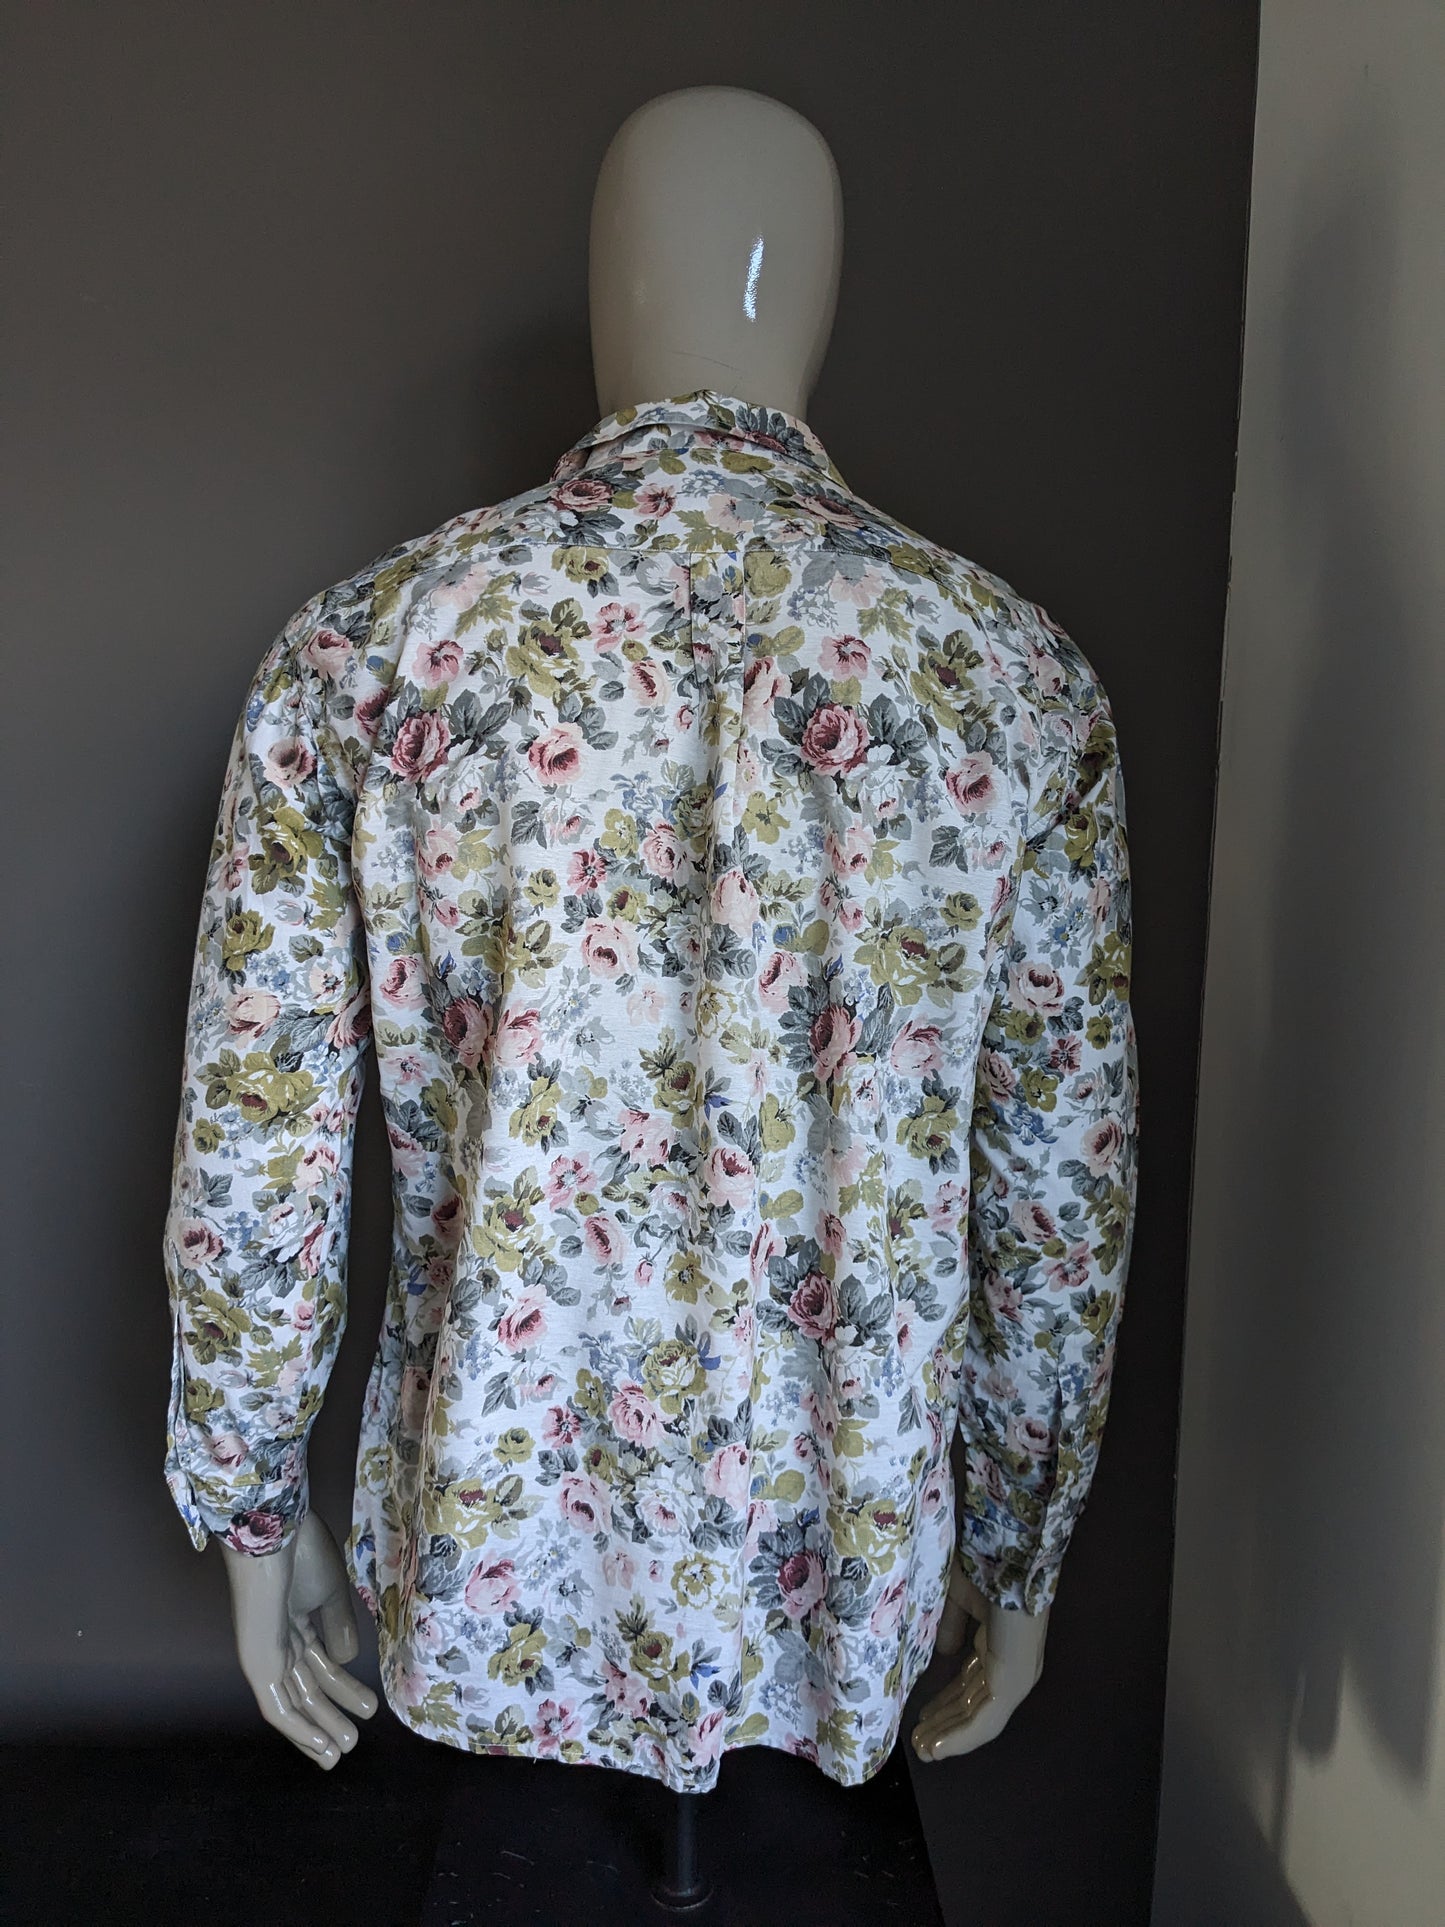 Vintage Men's Fashion overhemd. Roze Groen Roze bloemen print. Maat 41 / 42 - L.